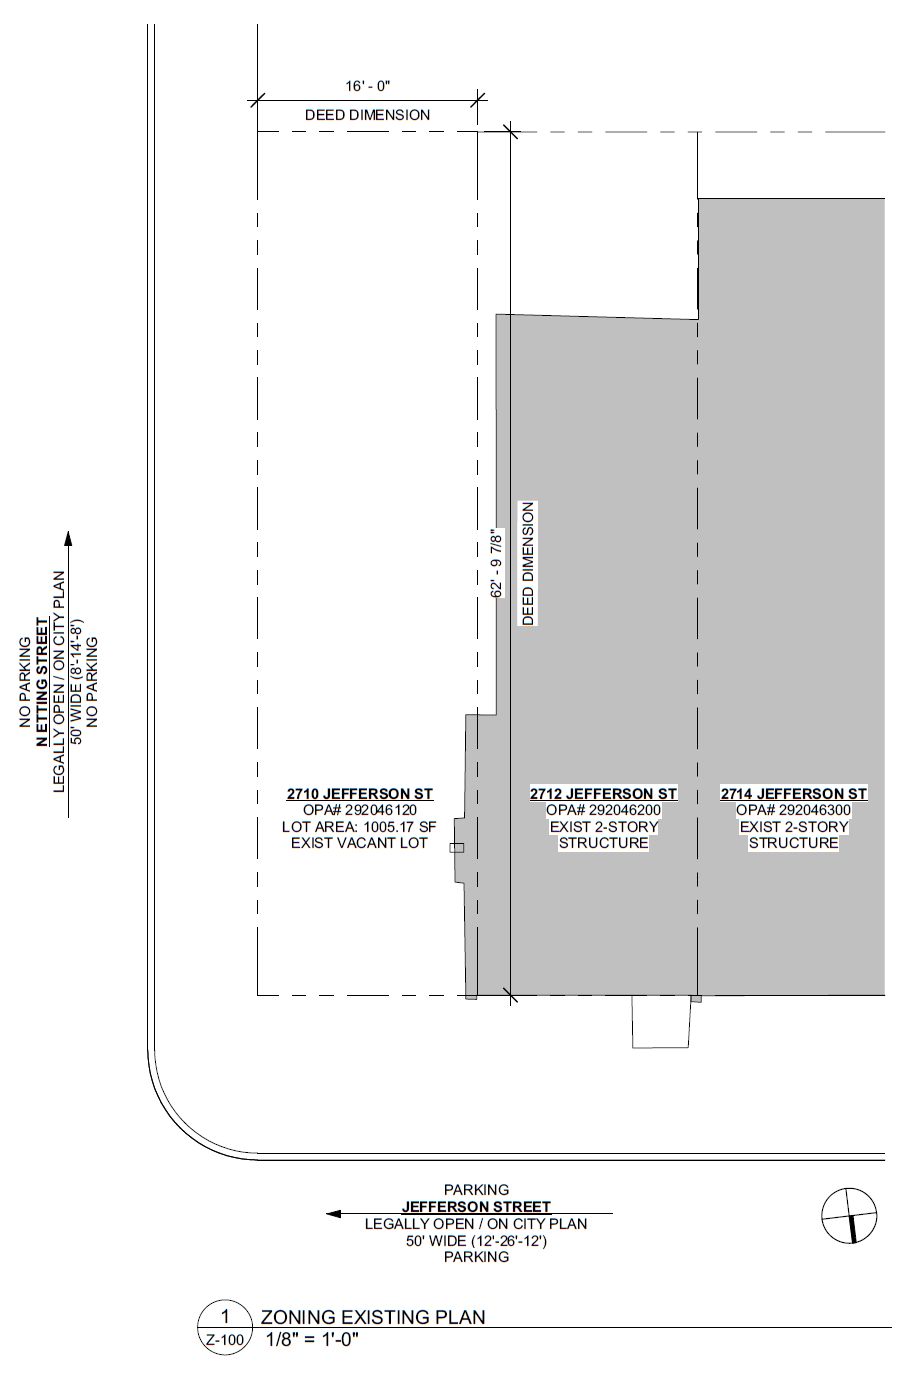 2710 Jefferson Street. Site plan. Credit: Moto Designshop via the City of Philadelphia